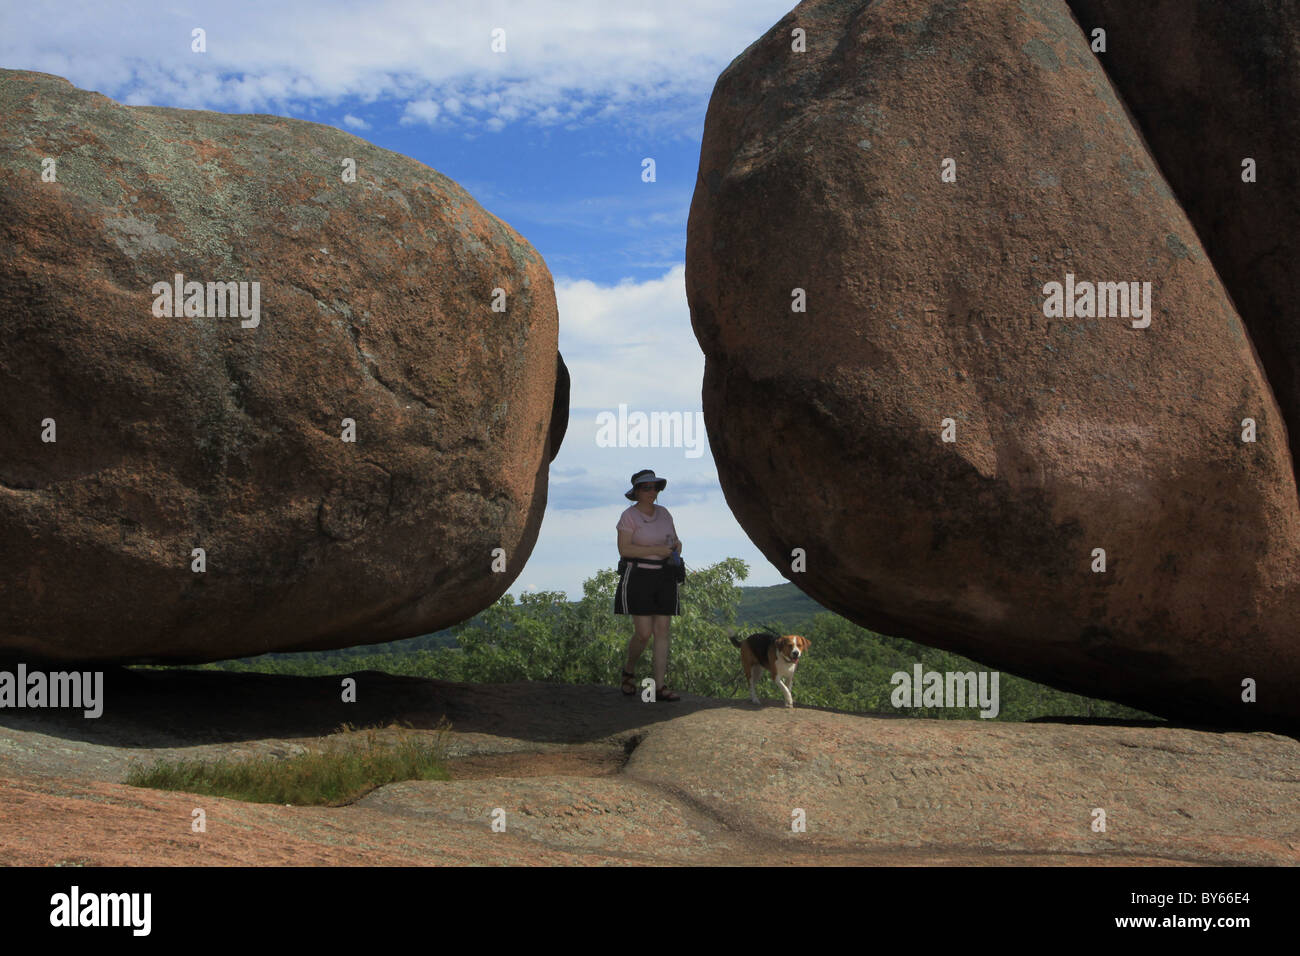 Frau und Hund Wanderer Bergsteiger Elefantenpark Felsen Staat Missouri Granit Stockfoto